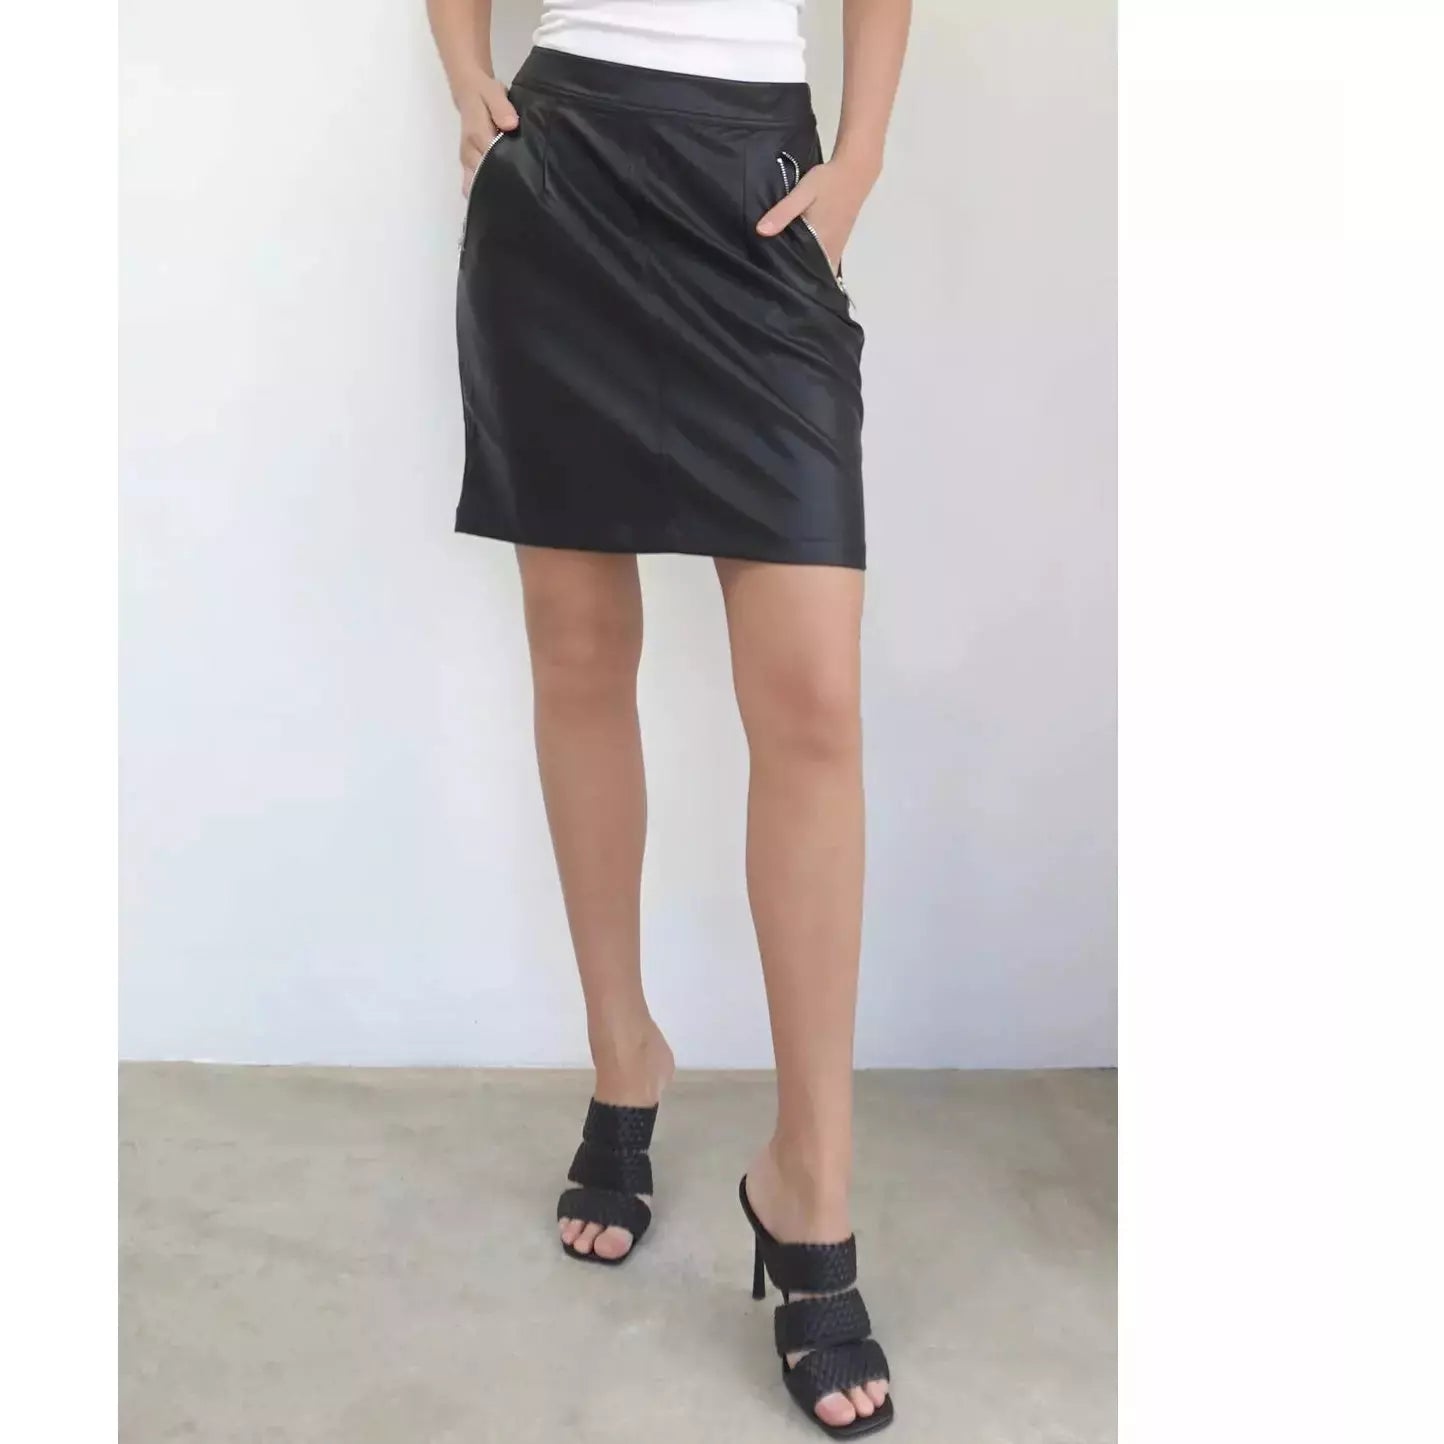 Religion Clothing Ladies Skirt - Sun Vegan Leather